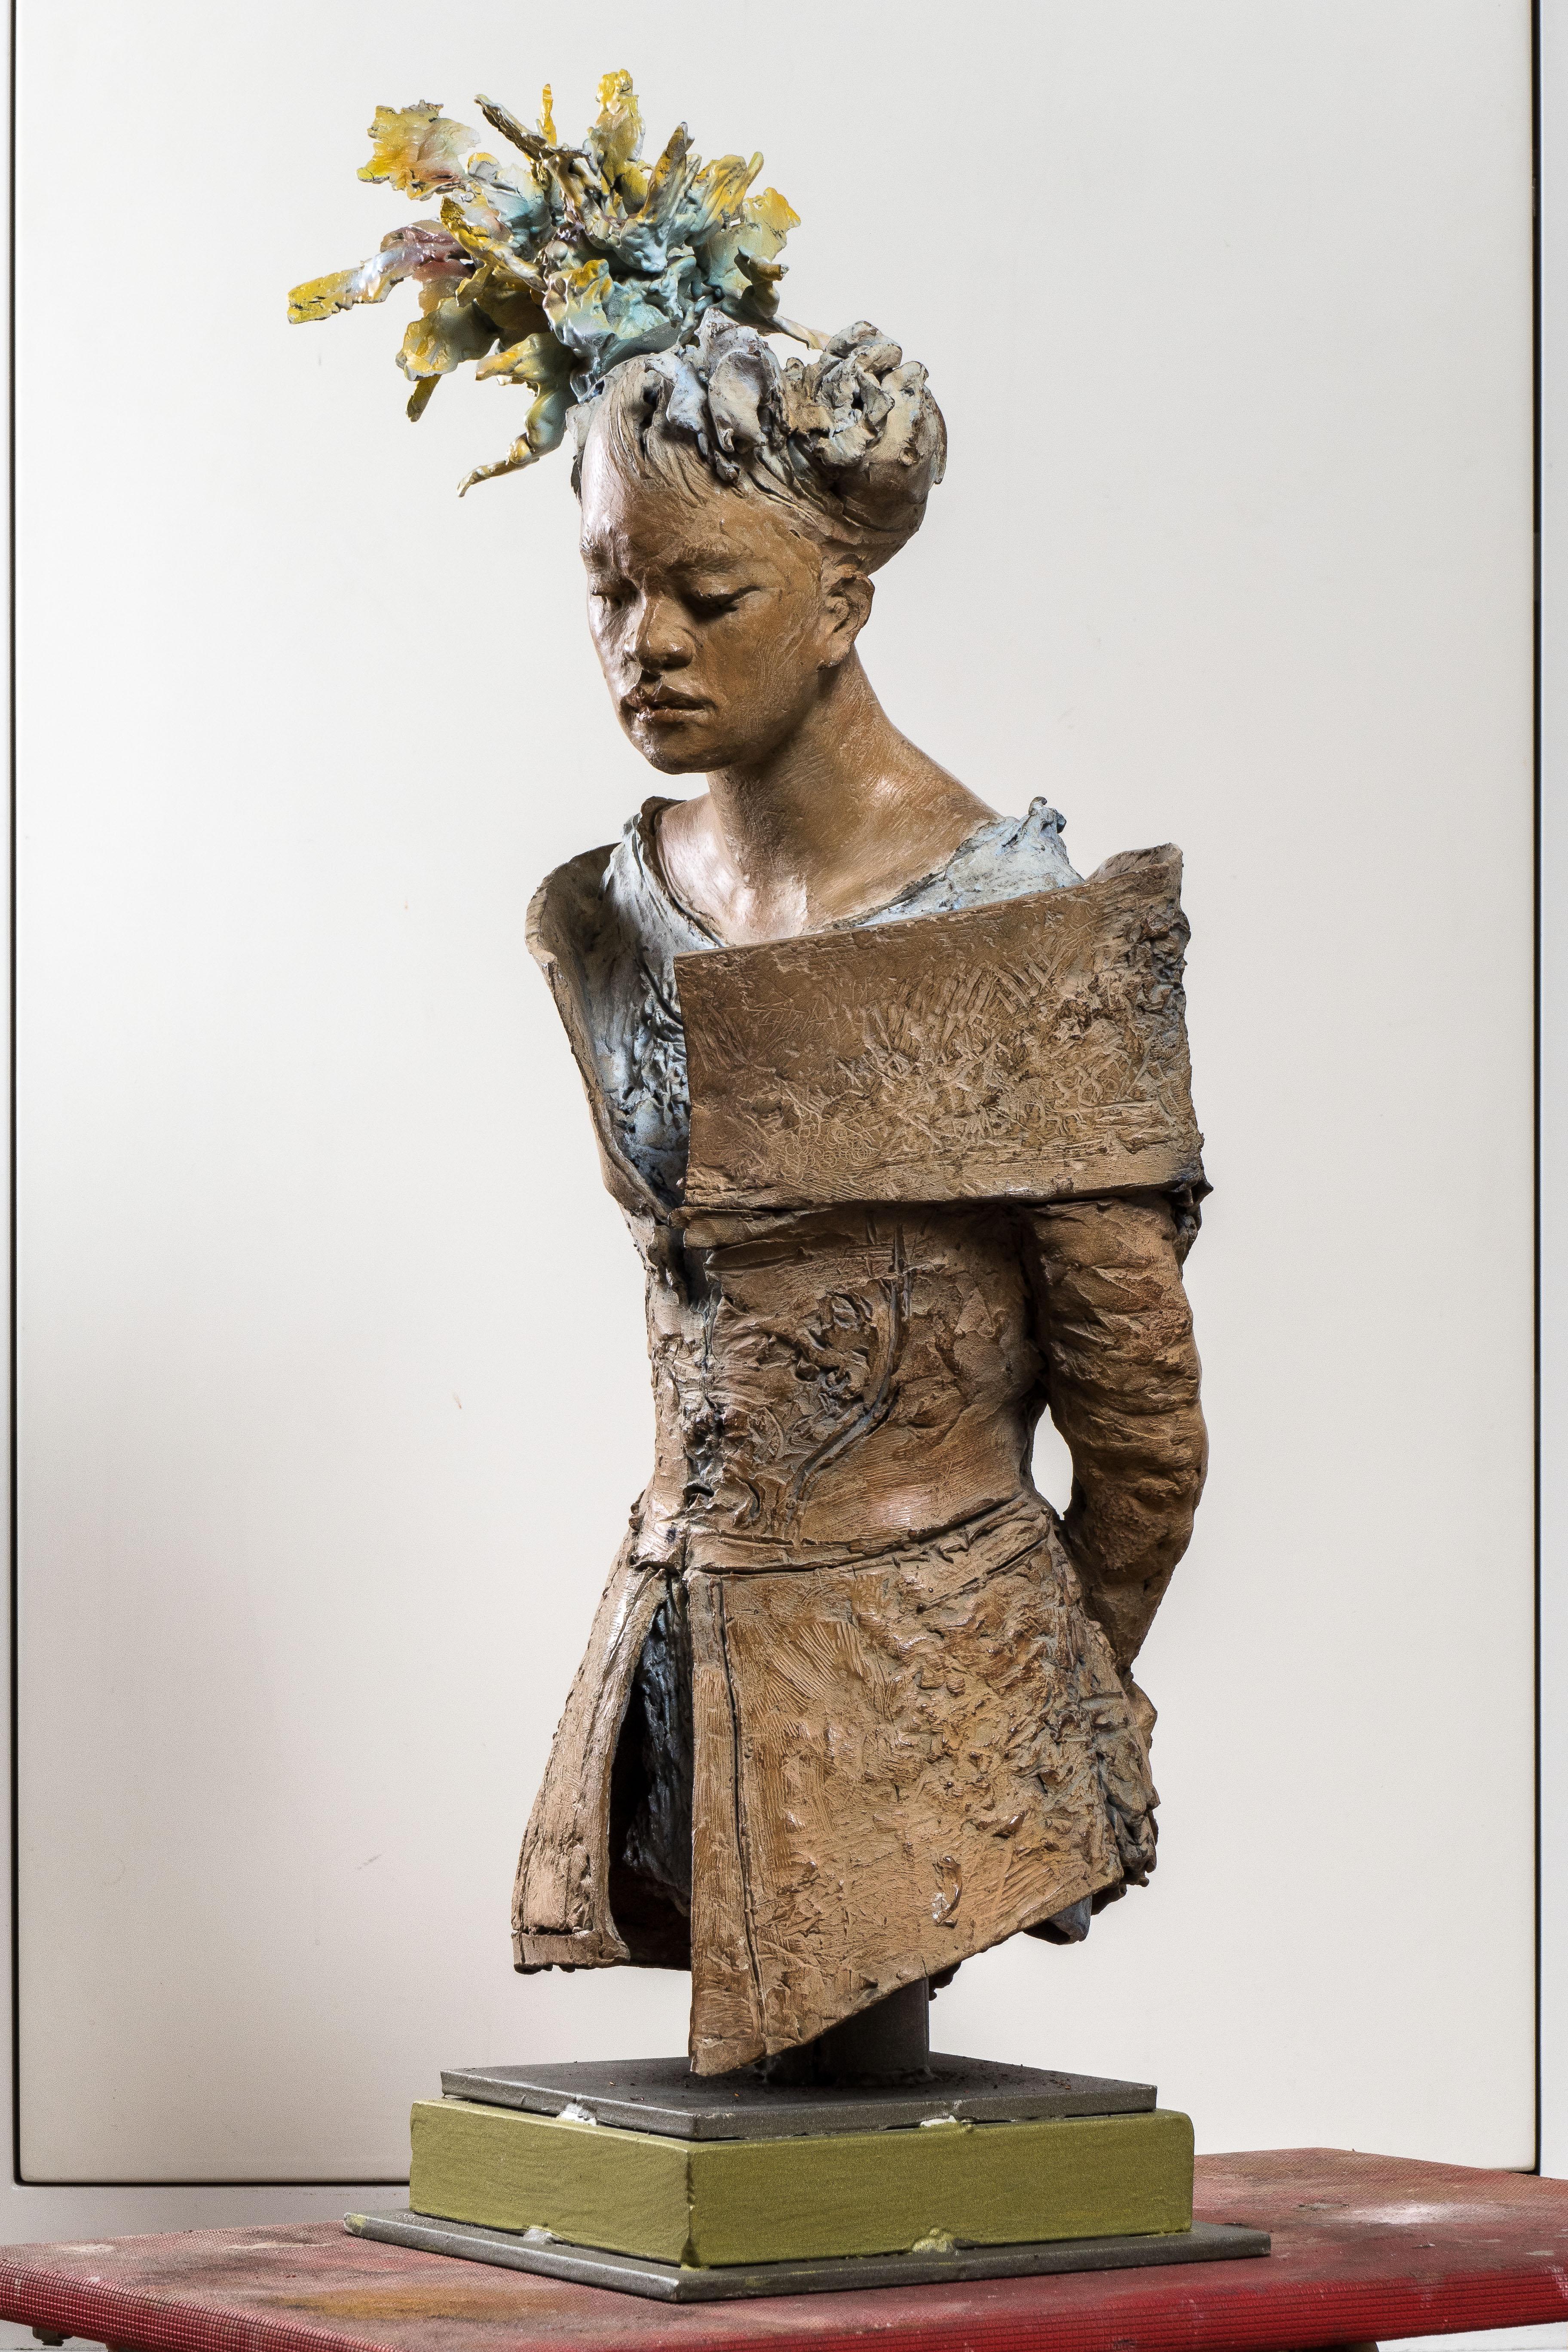 Ugo Riva Figurative Sculpture - Young Lady portrait bronze sculpture  - Italian contemporary outdoor realist 